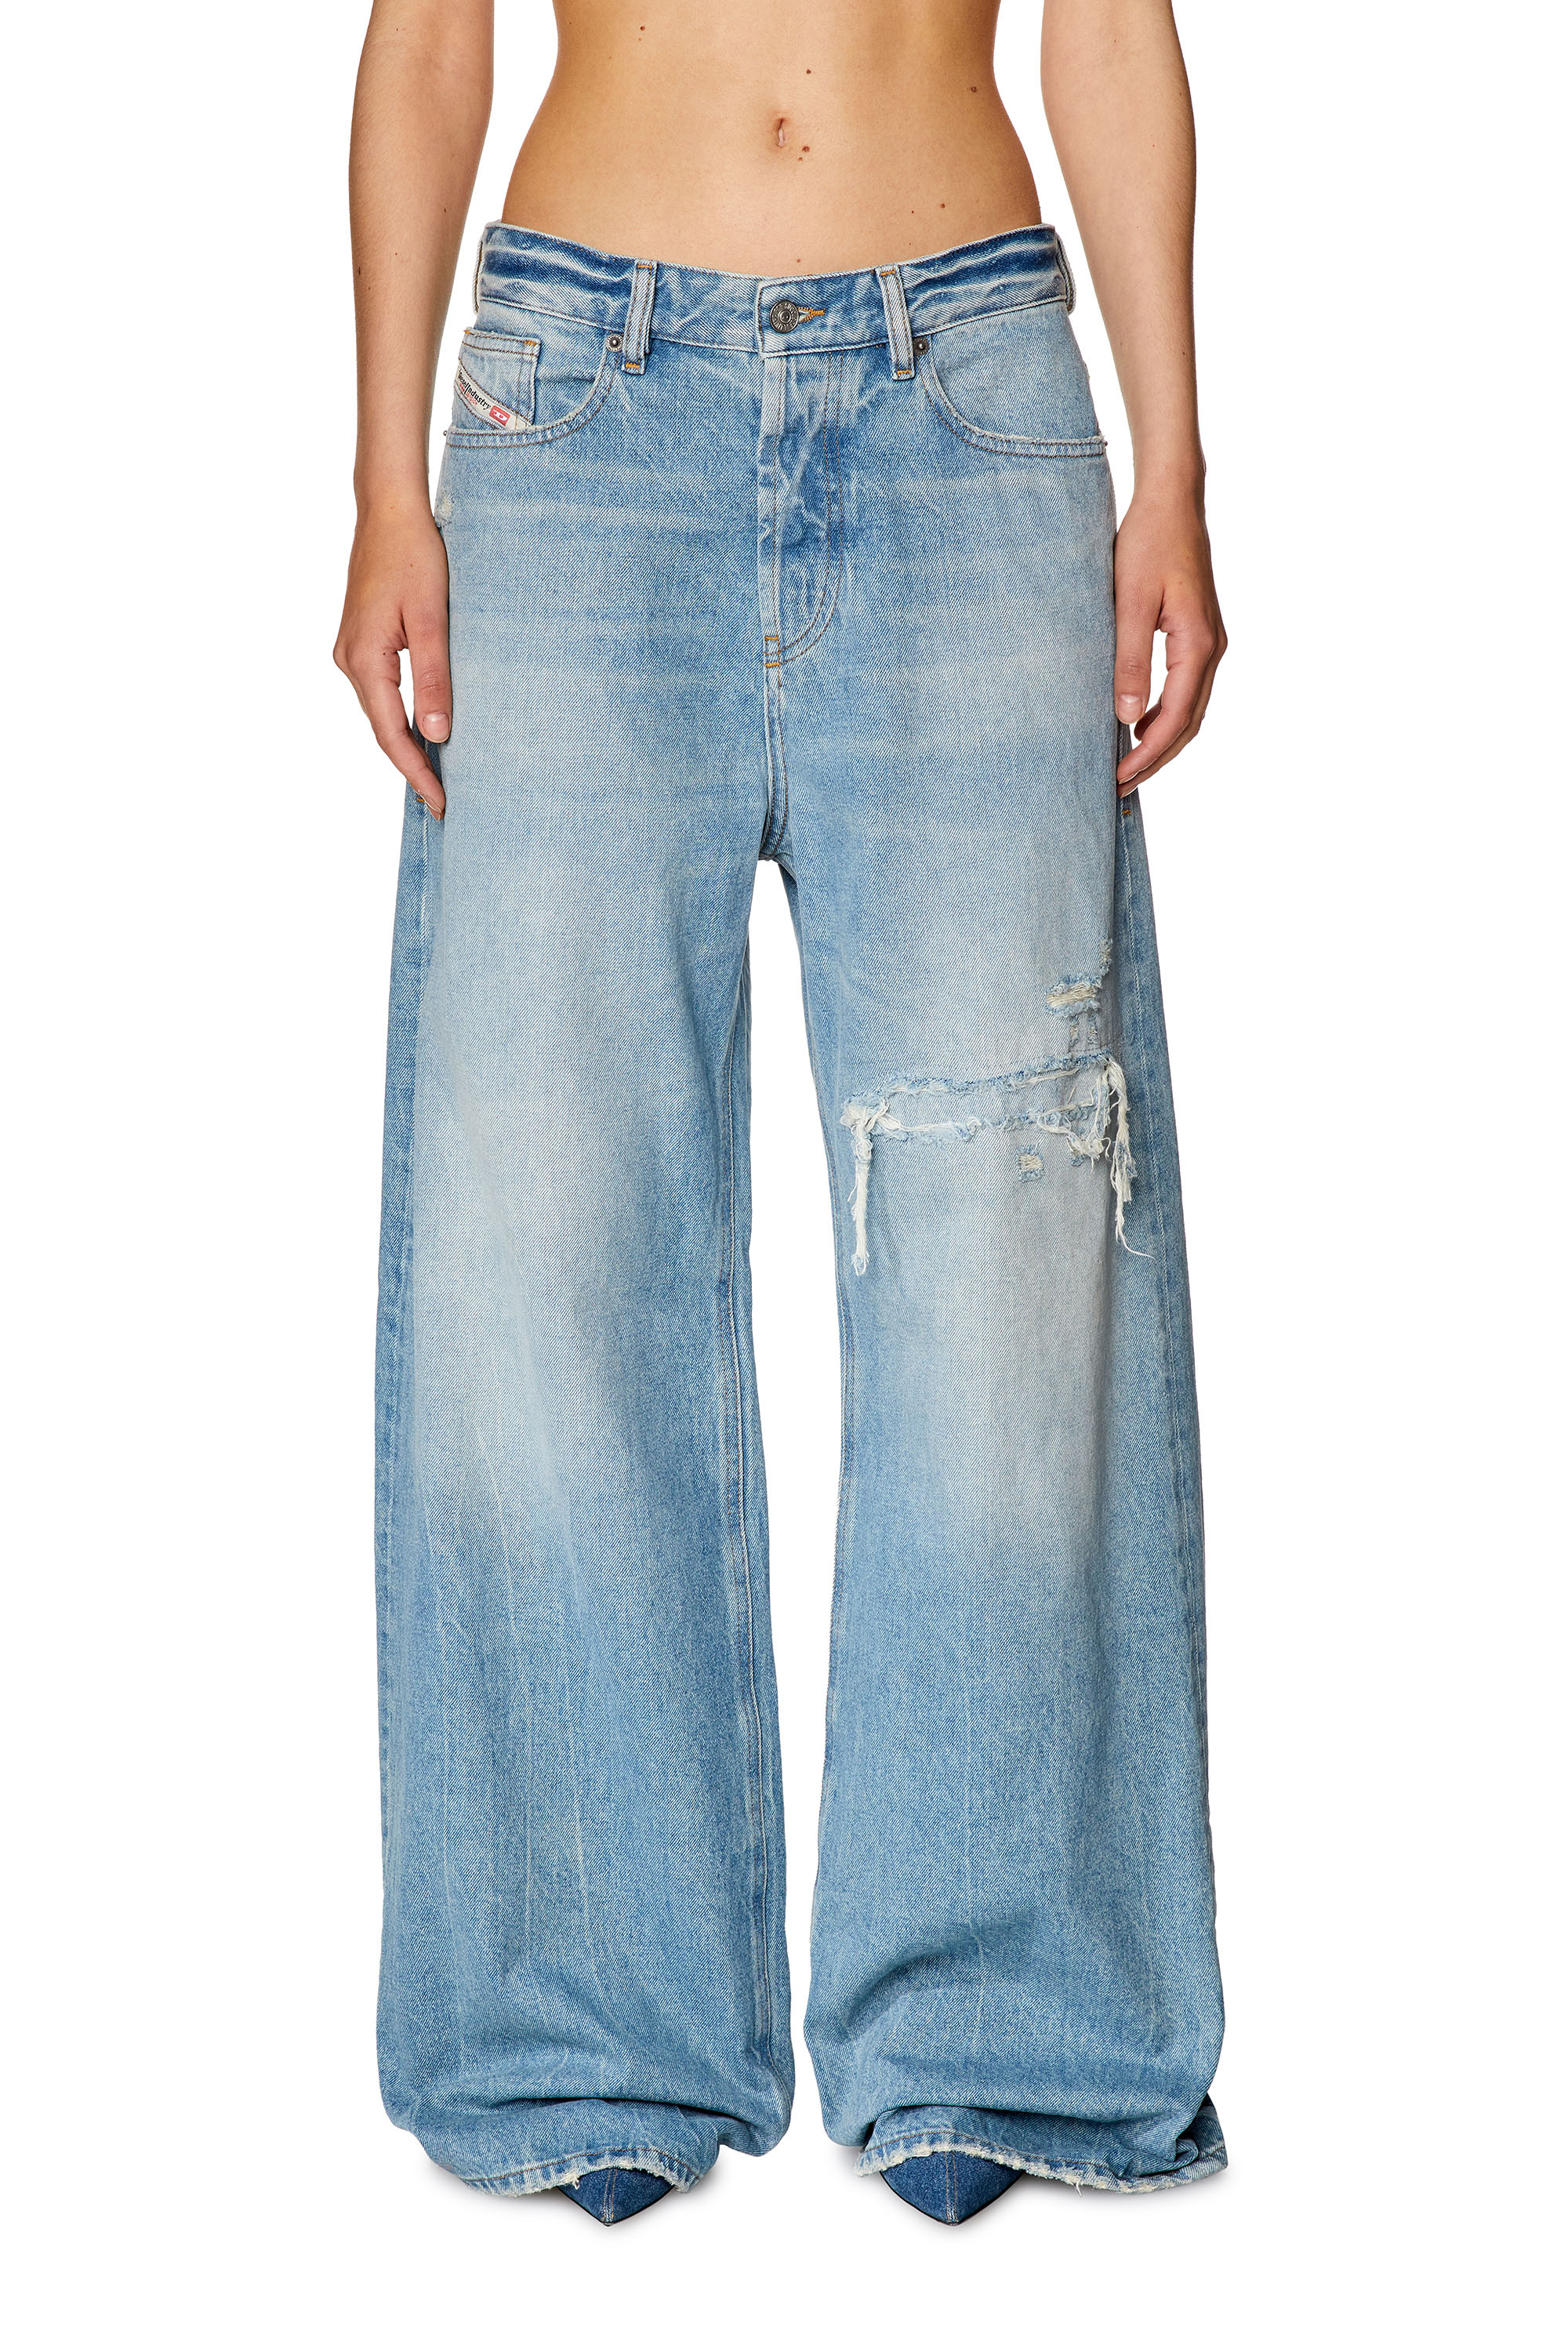 Women's Jeans: Skinny, Slim, Palazzo, Boyfriend, Baggy | Diesel®